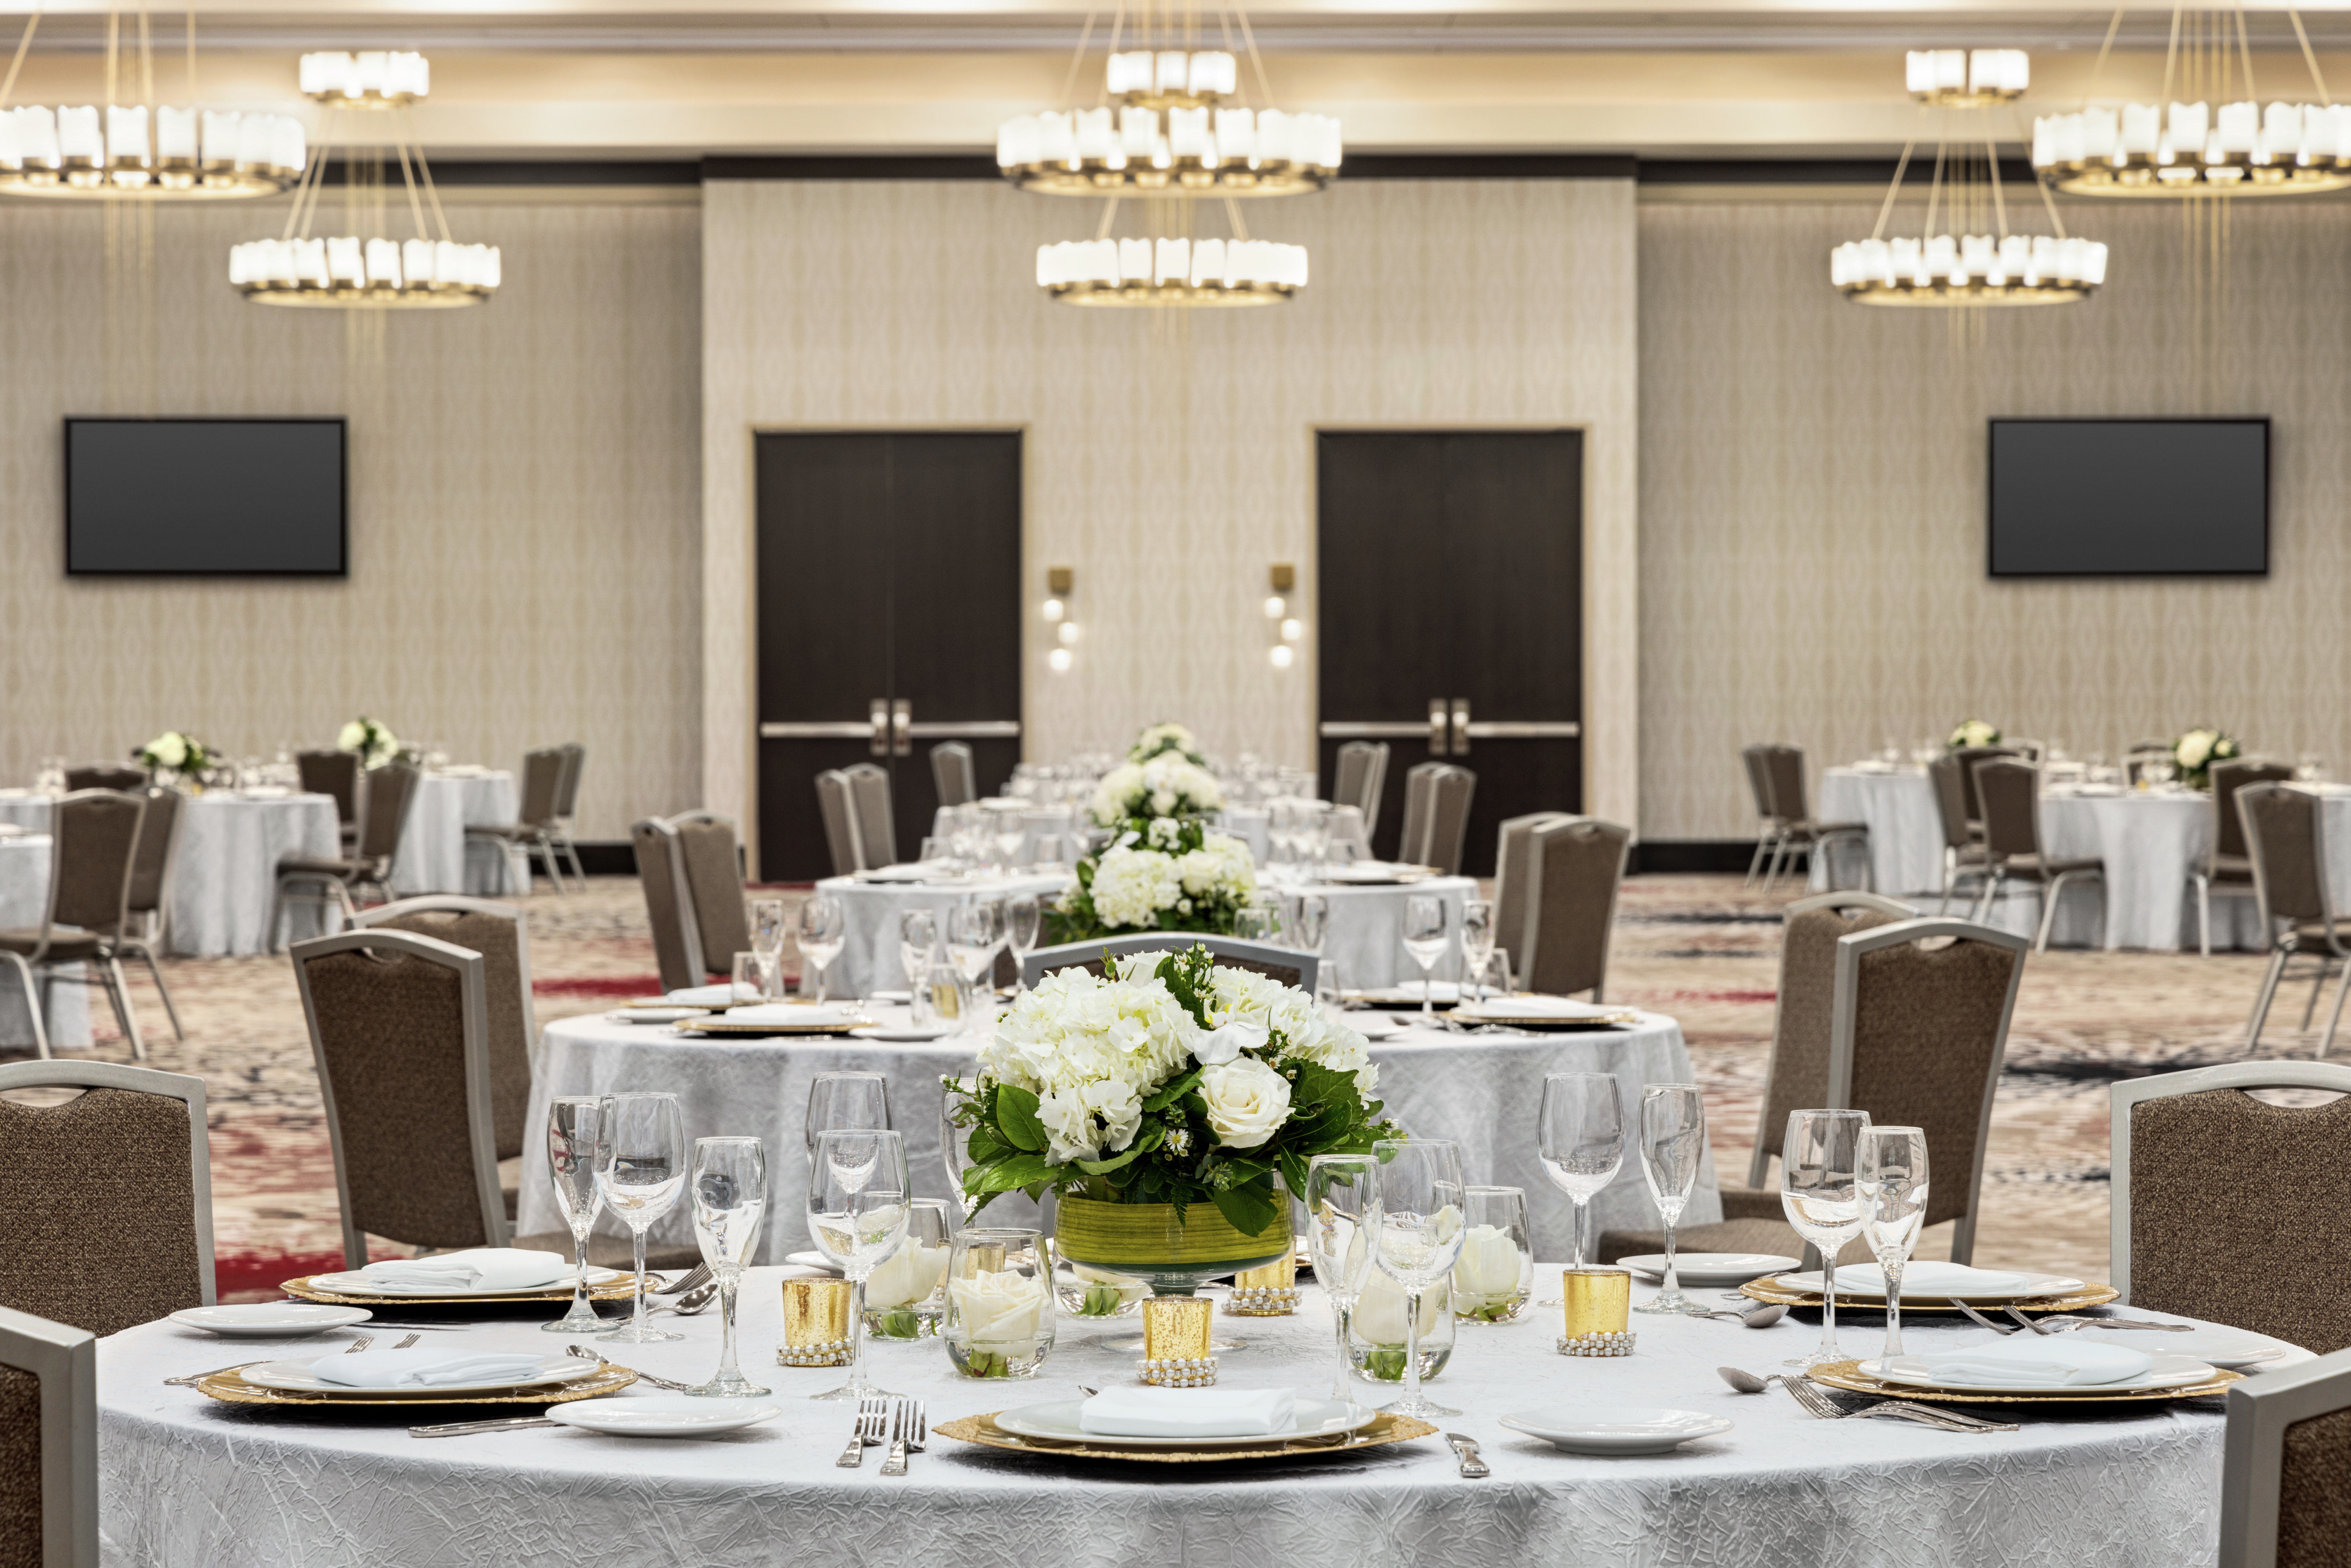 Spacious hotel ballroom featuring wedding setup with stunning centerpieces.